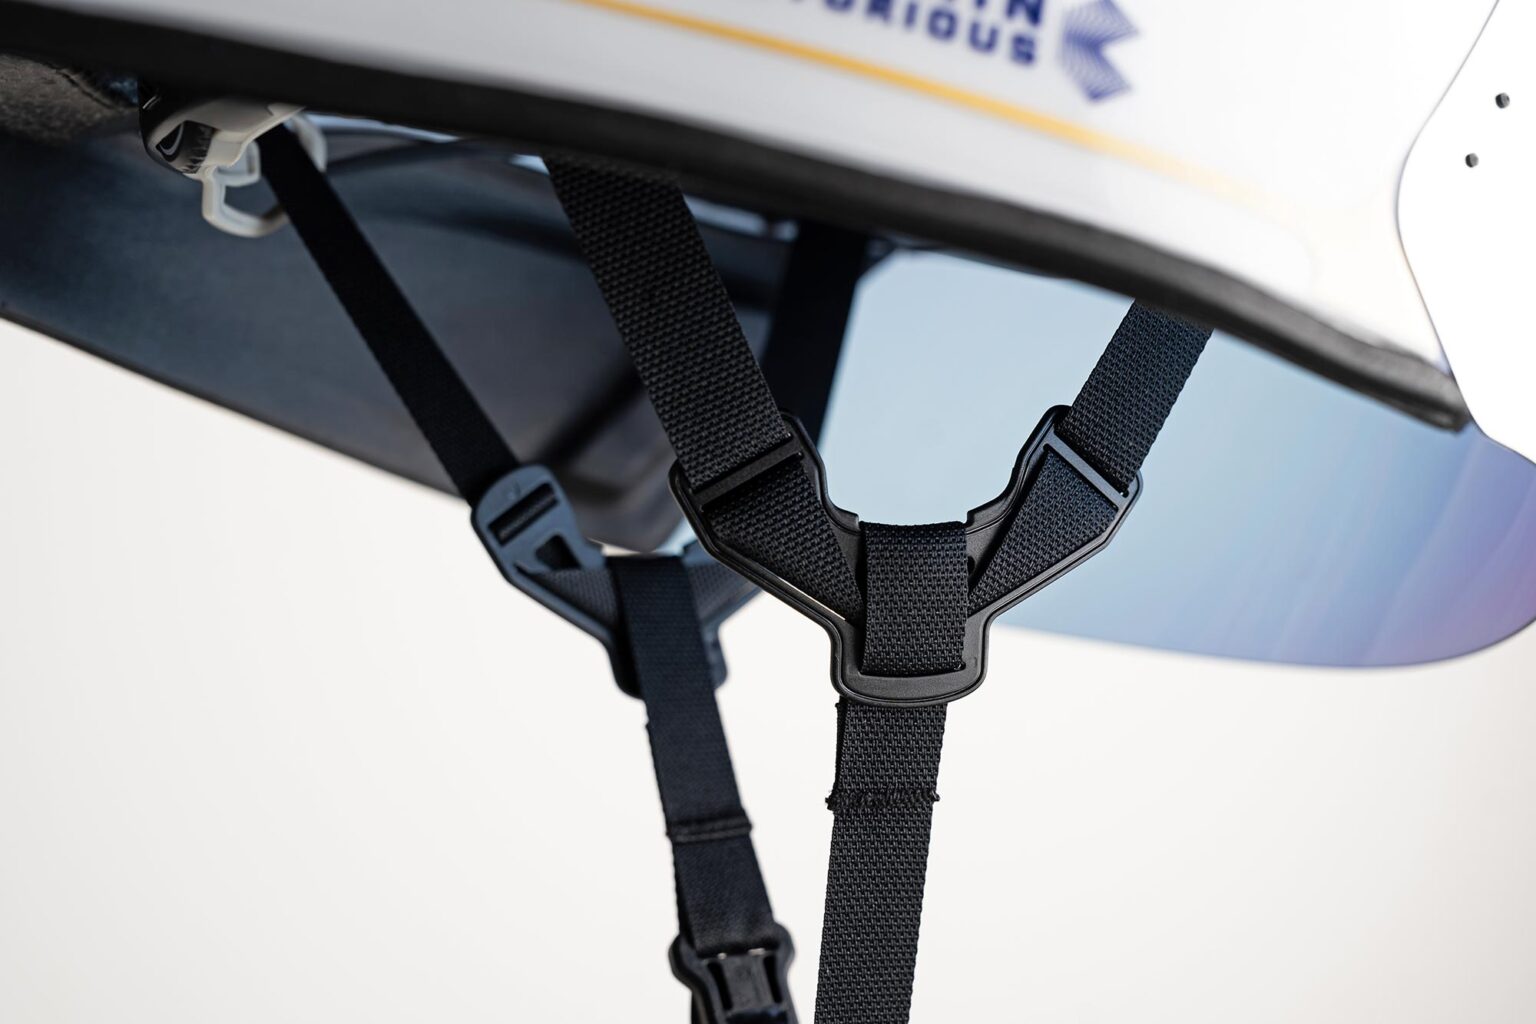 Rudy Project Wingdream time trial aero helmet, inside tech details